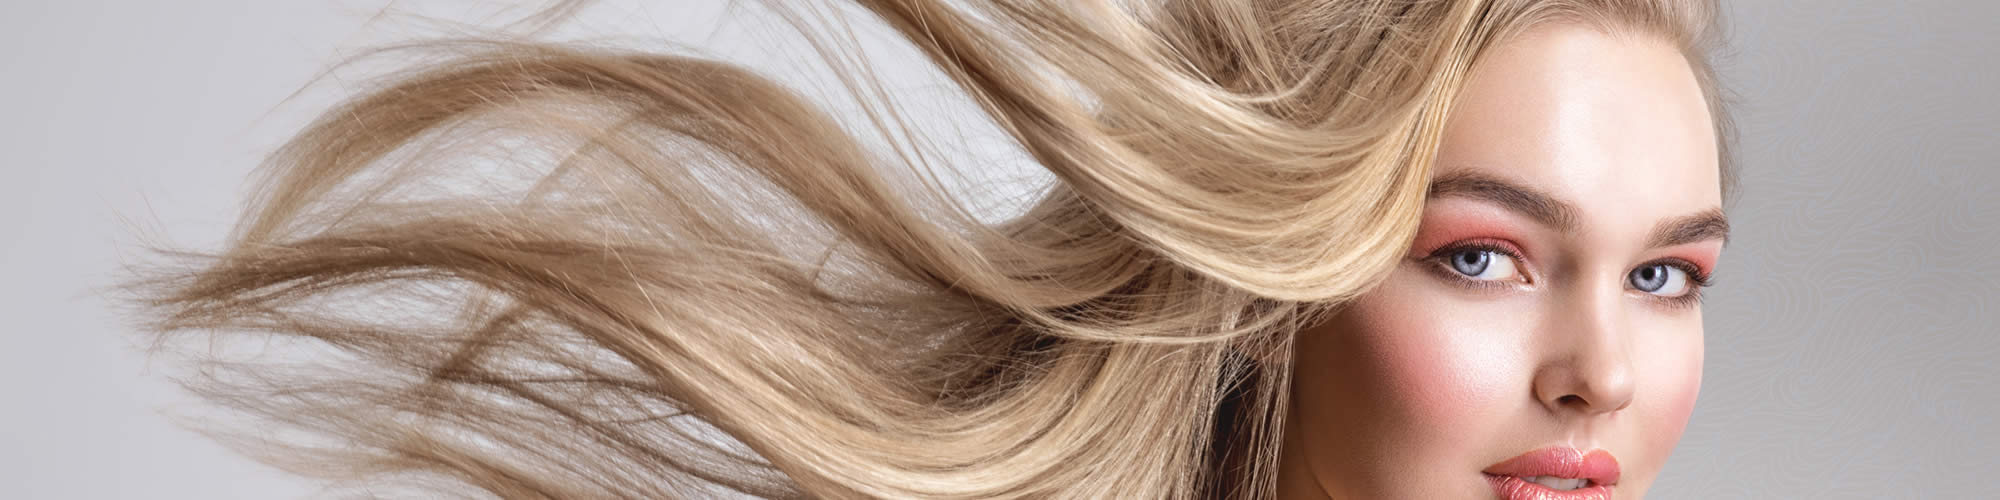 NYC Wigs for Hair Loss, Alopecia | Brooklyn Wigs for Hair Loss